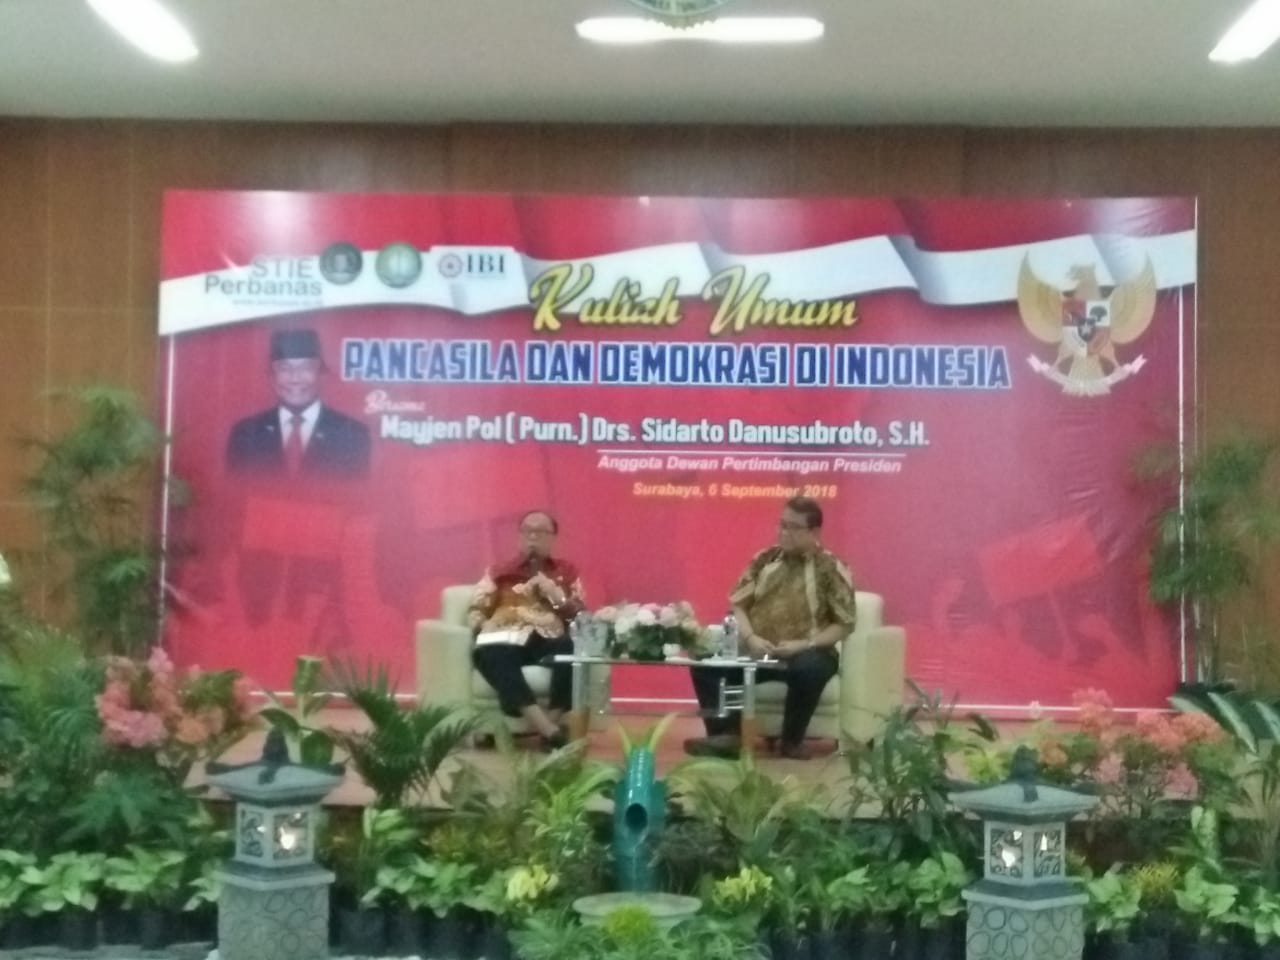 Mayjen Pol (Purn.) Sidarto Danusubroto ketika mengisi kuliah tamu di STIE Perbanas Surabaya, Kamis, 6 September 2018. Foto: Amanah/ngopibareng.id